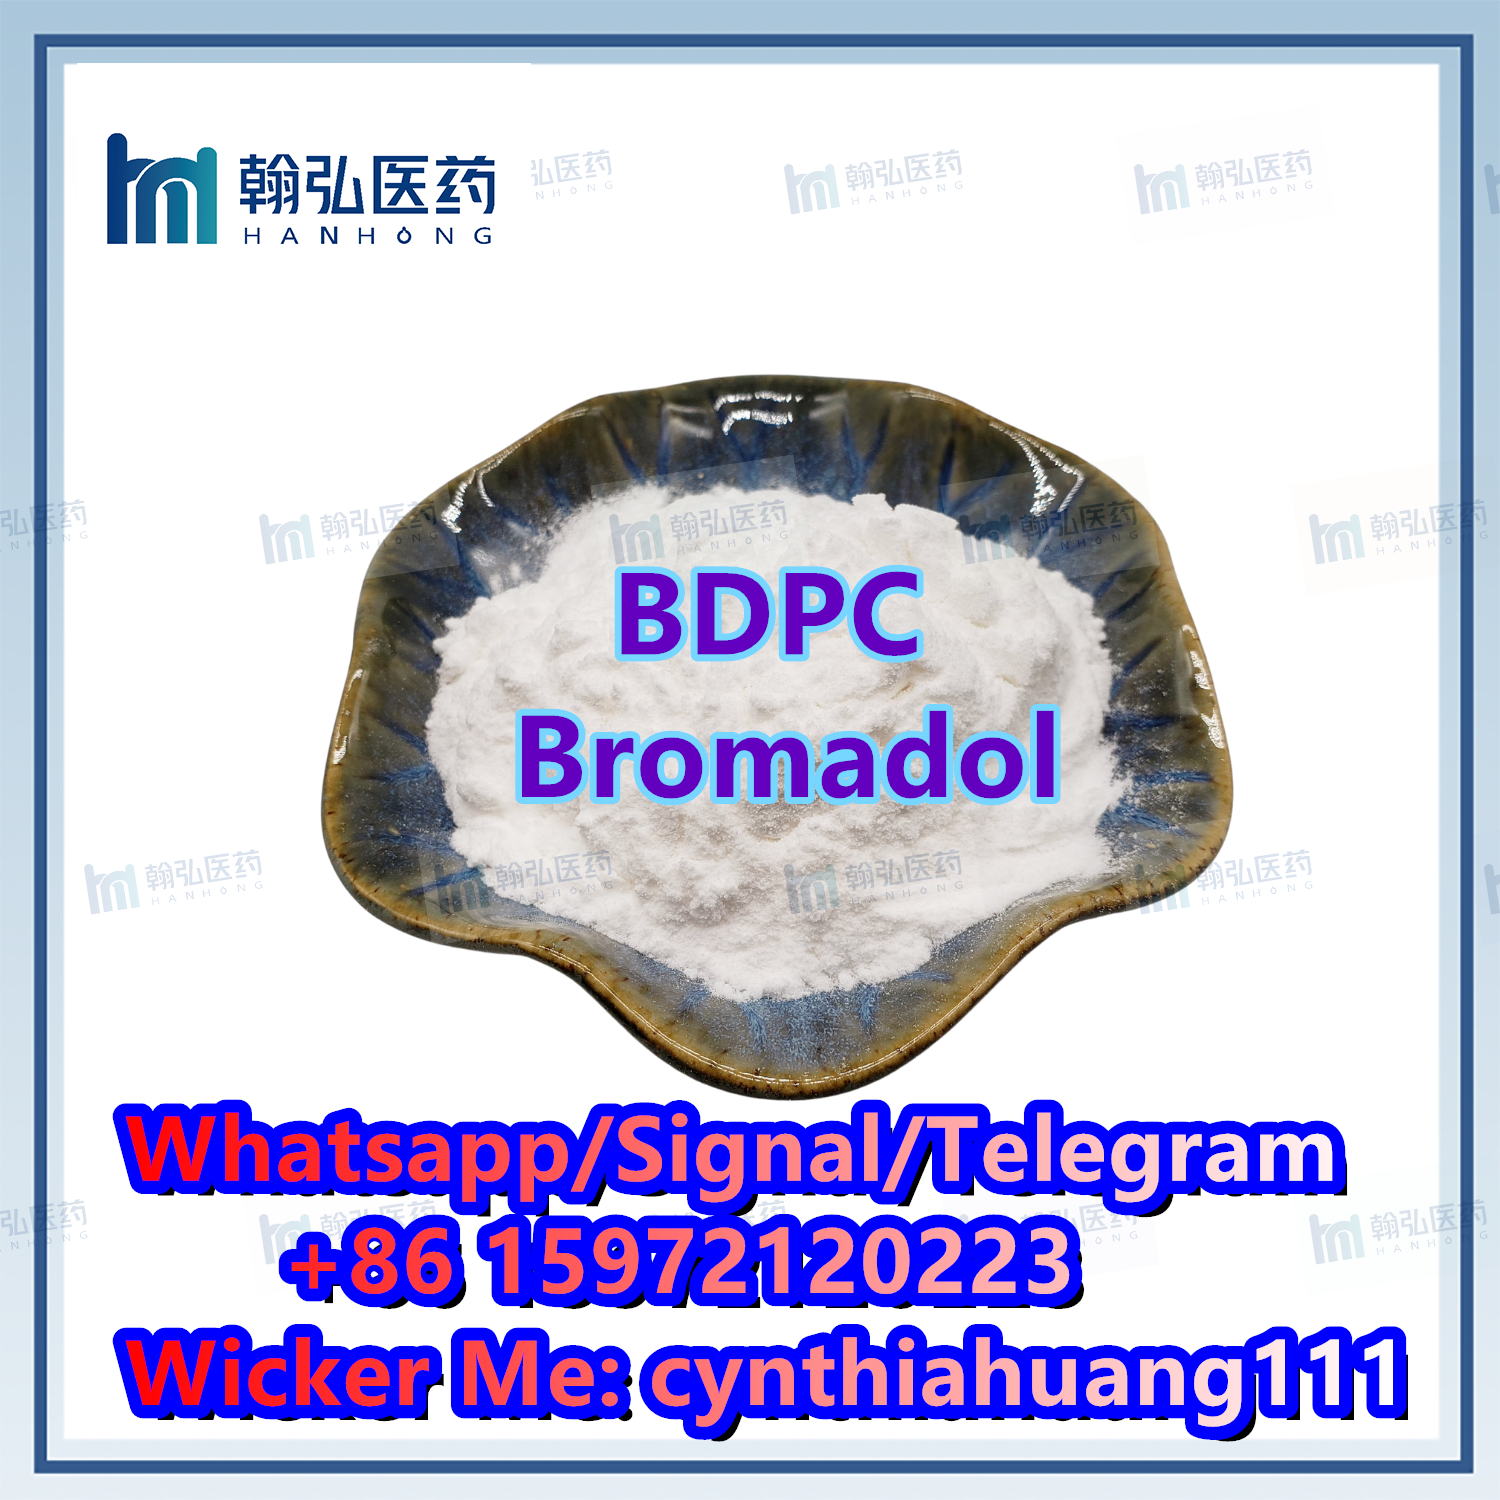  Mexico USA Bromadol HCl Bdpc CAS 77239-98-6 Whatsapp/Signal/Telegaram: +86 15972120223 Wicker: cynthiahuang1111